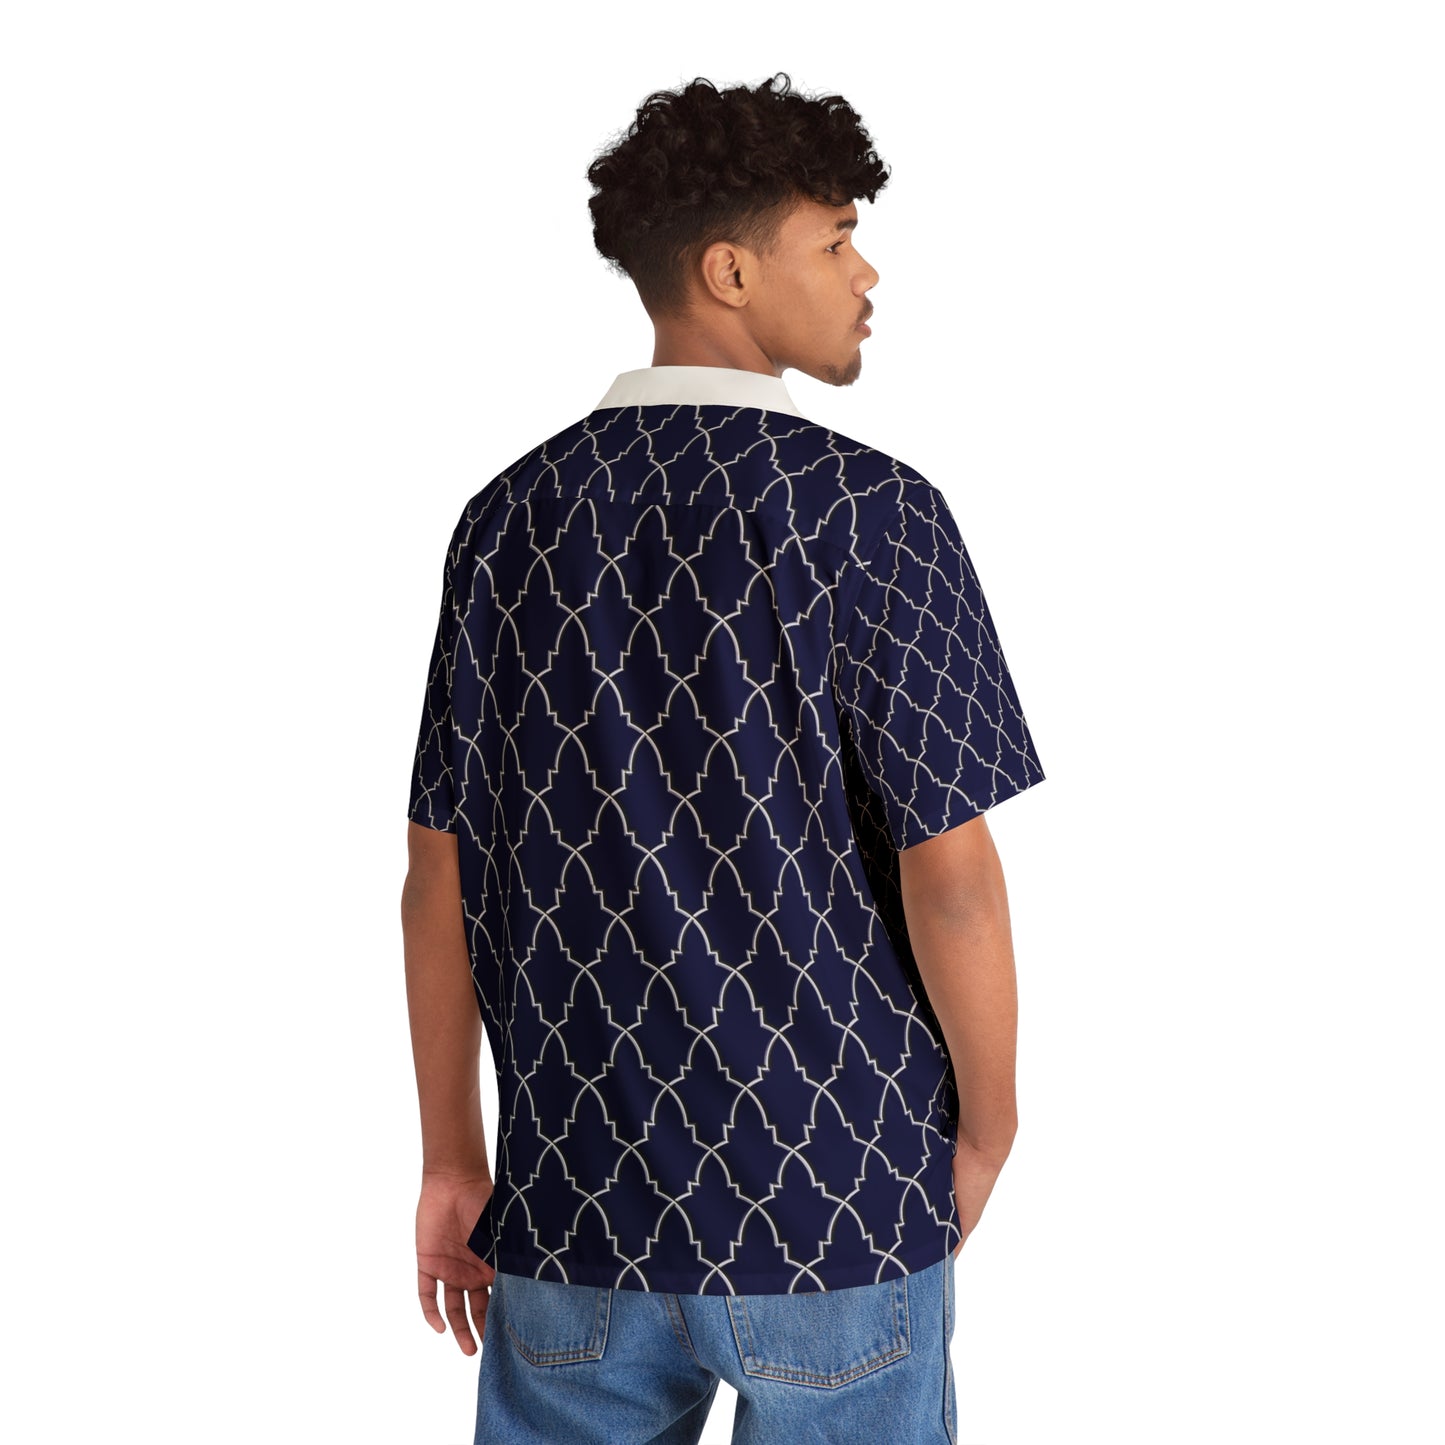 Moroccan tiles - Blue - Men's Hawaiian Shirt